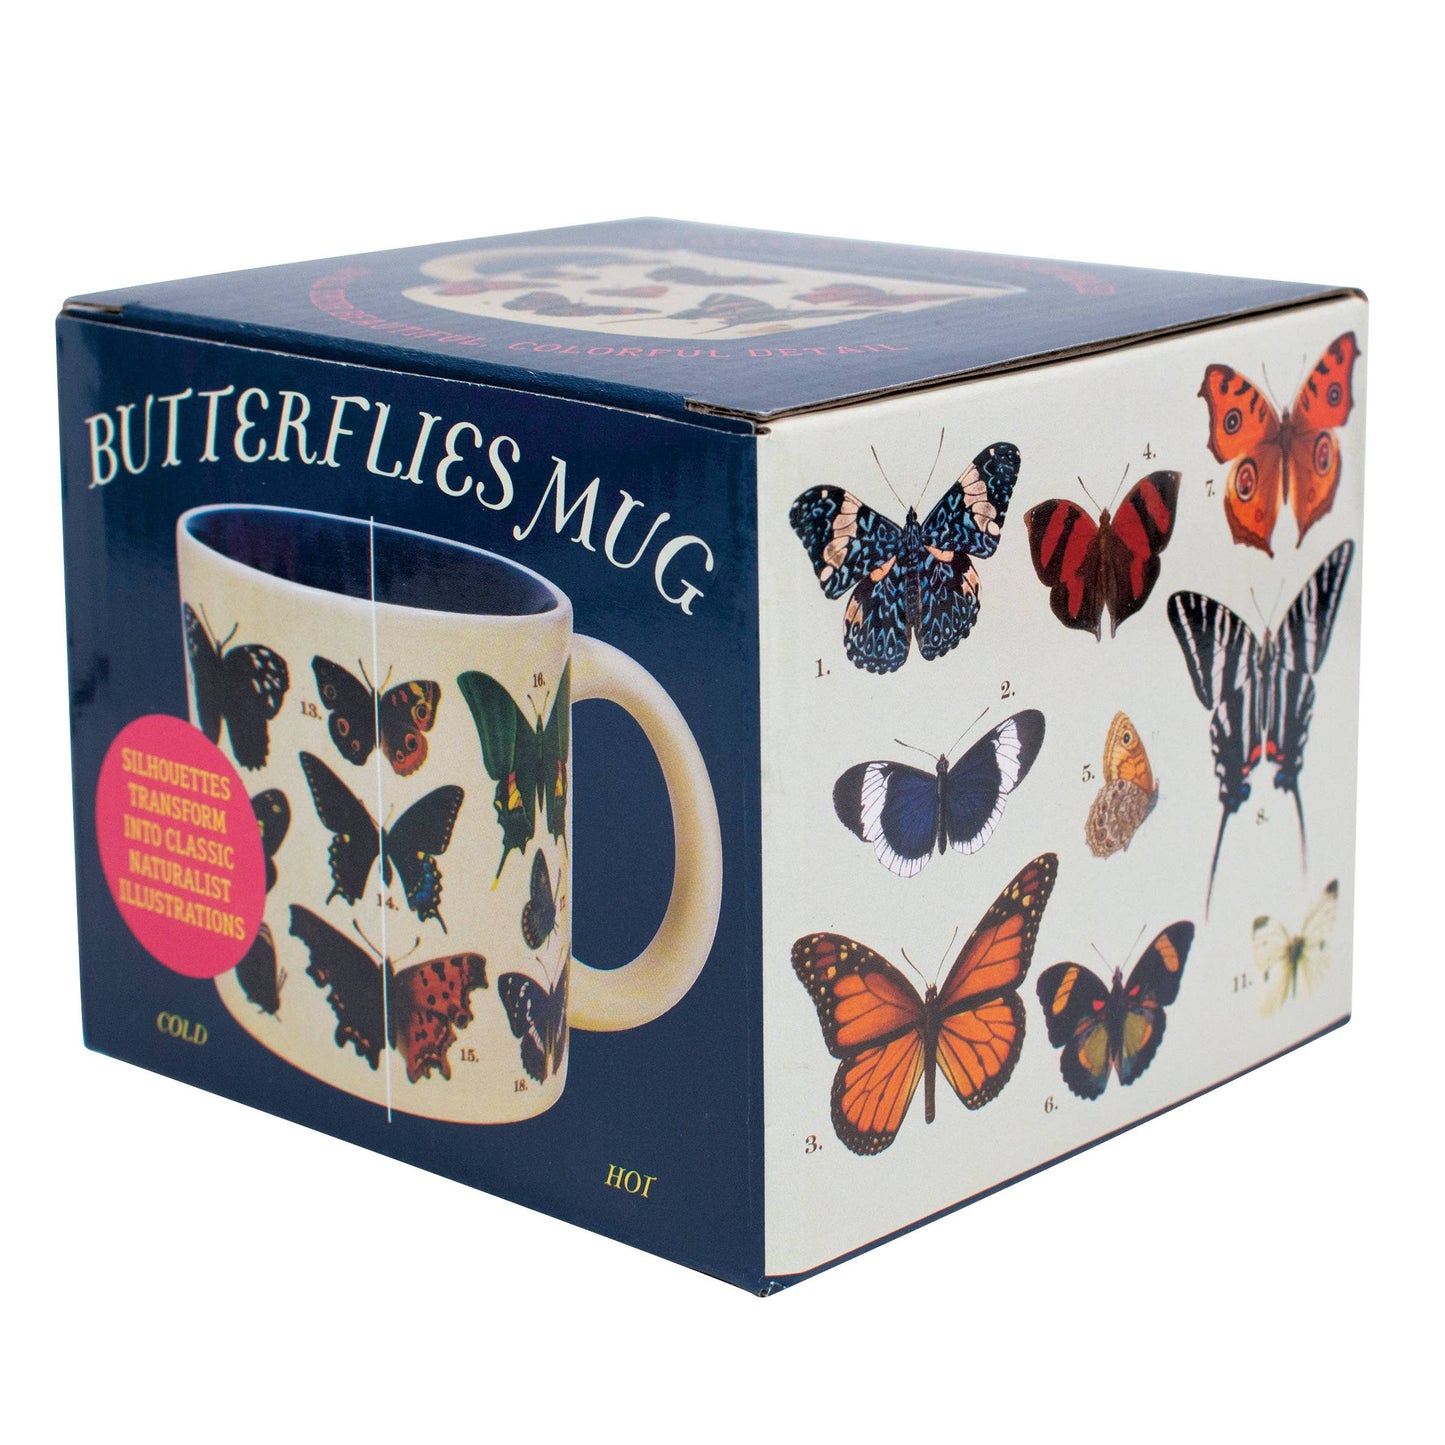 Butterflies Heat-Changing Coffee Mug